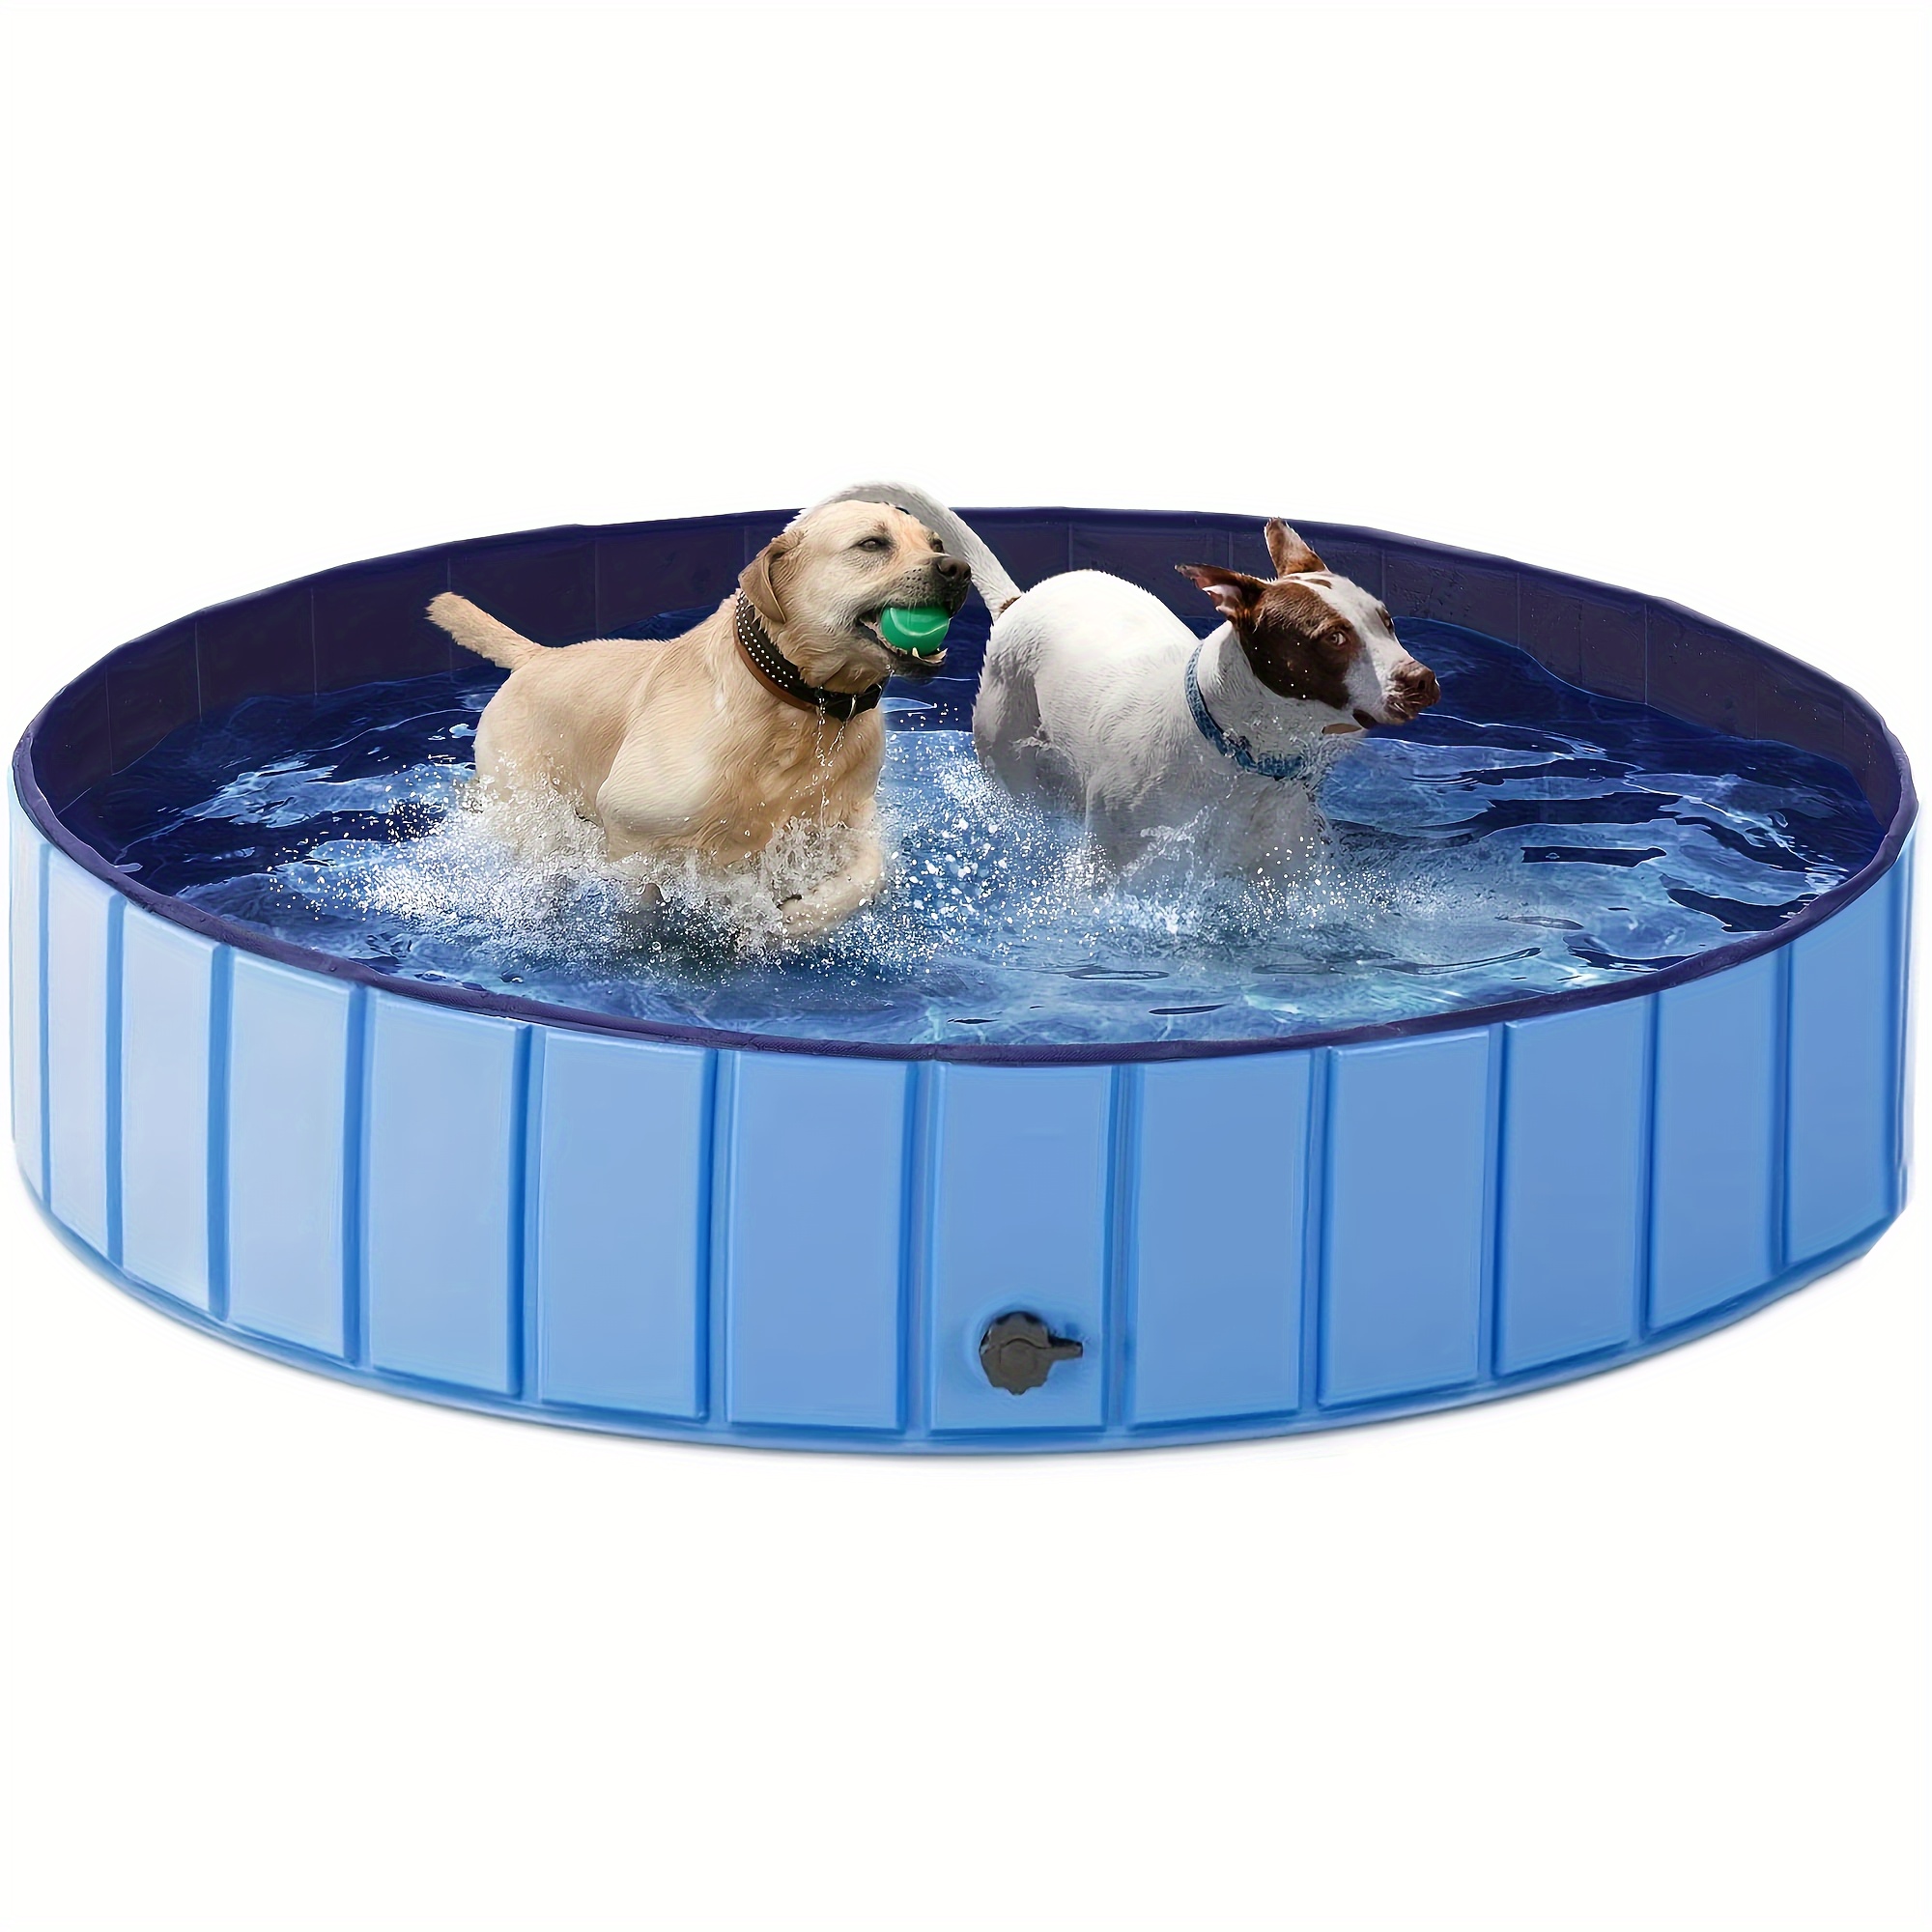 

Pet Dog Pool, Foldable Hard Plastic Outdoor Dog Pool Pet Bath Pool, Portable Tub Kiddie Pool For Kids Pet Puppy Swimming Pool (63" X 11.8")